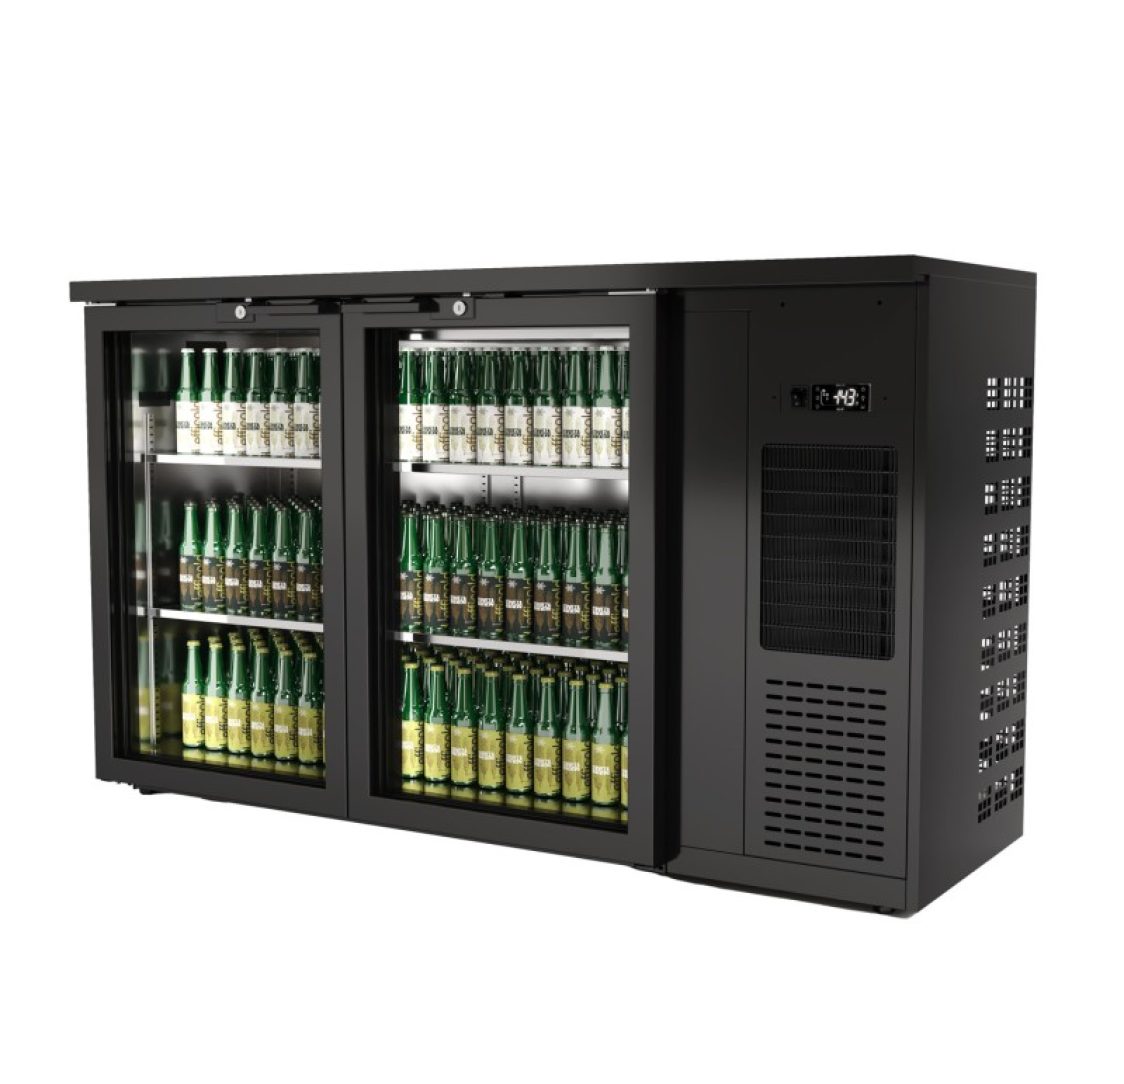 Expositor de Garrafas Refrigerado capacidade de 350 Garrafas – 200W – 1435X528X850mm